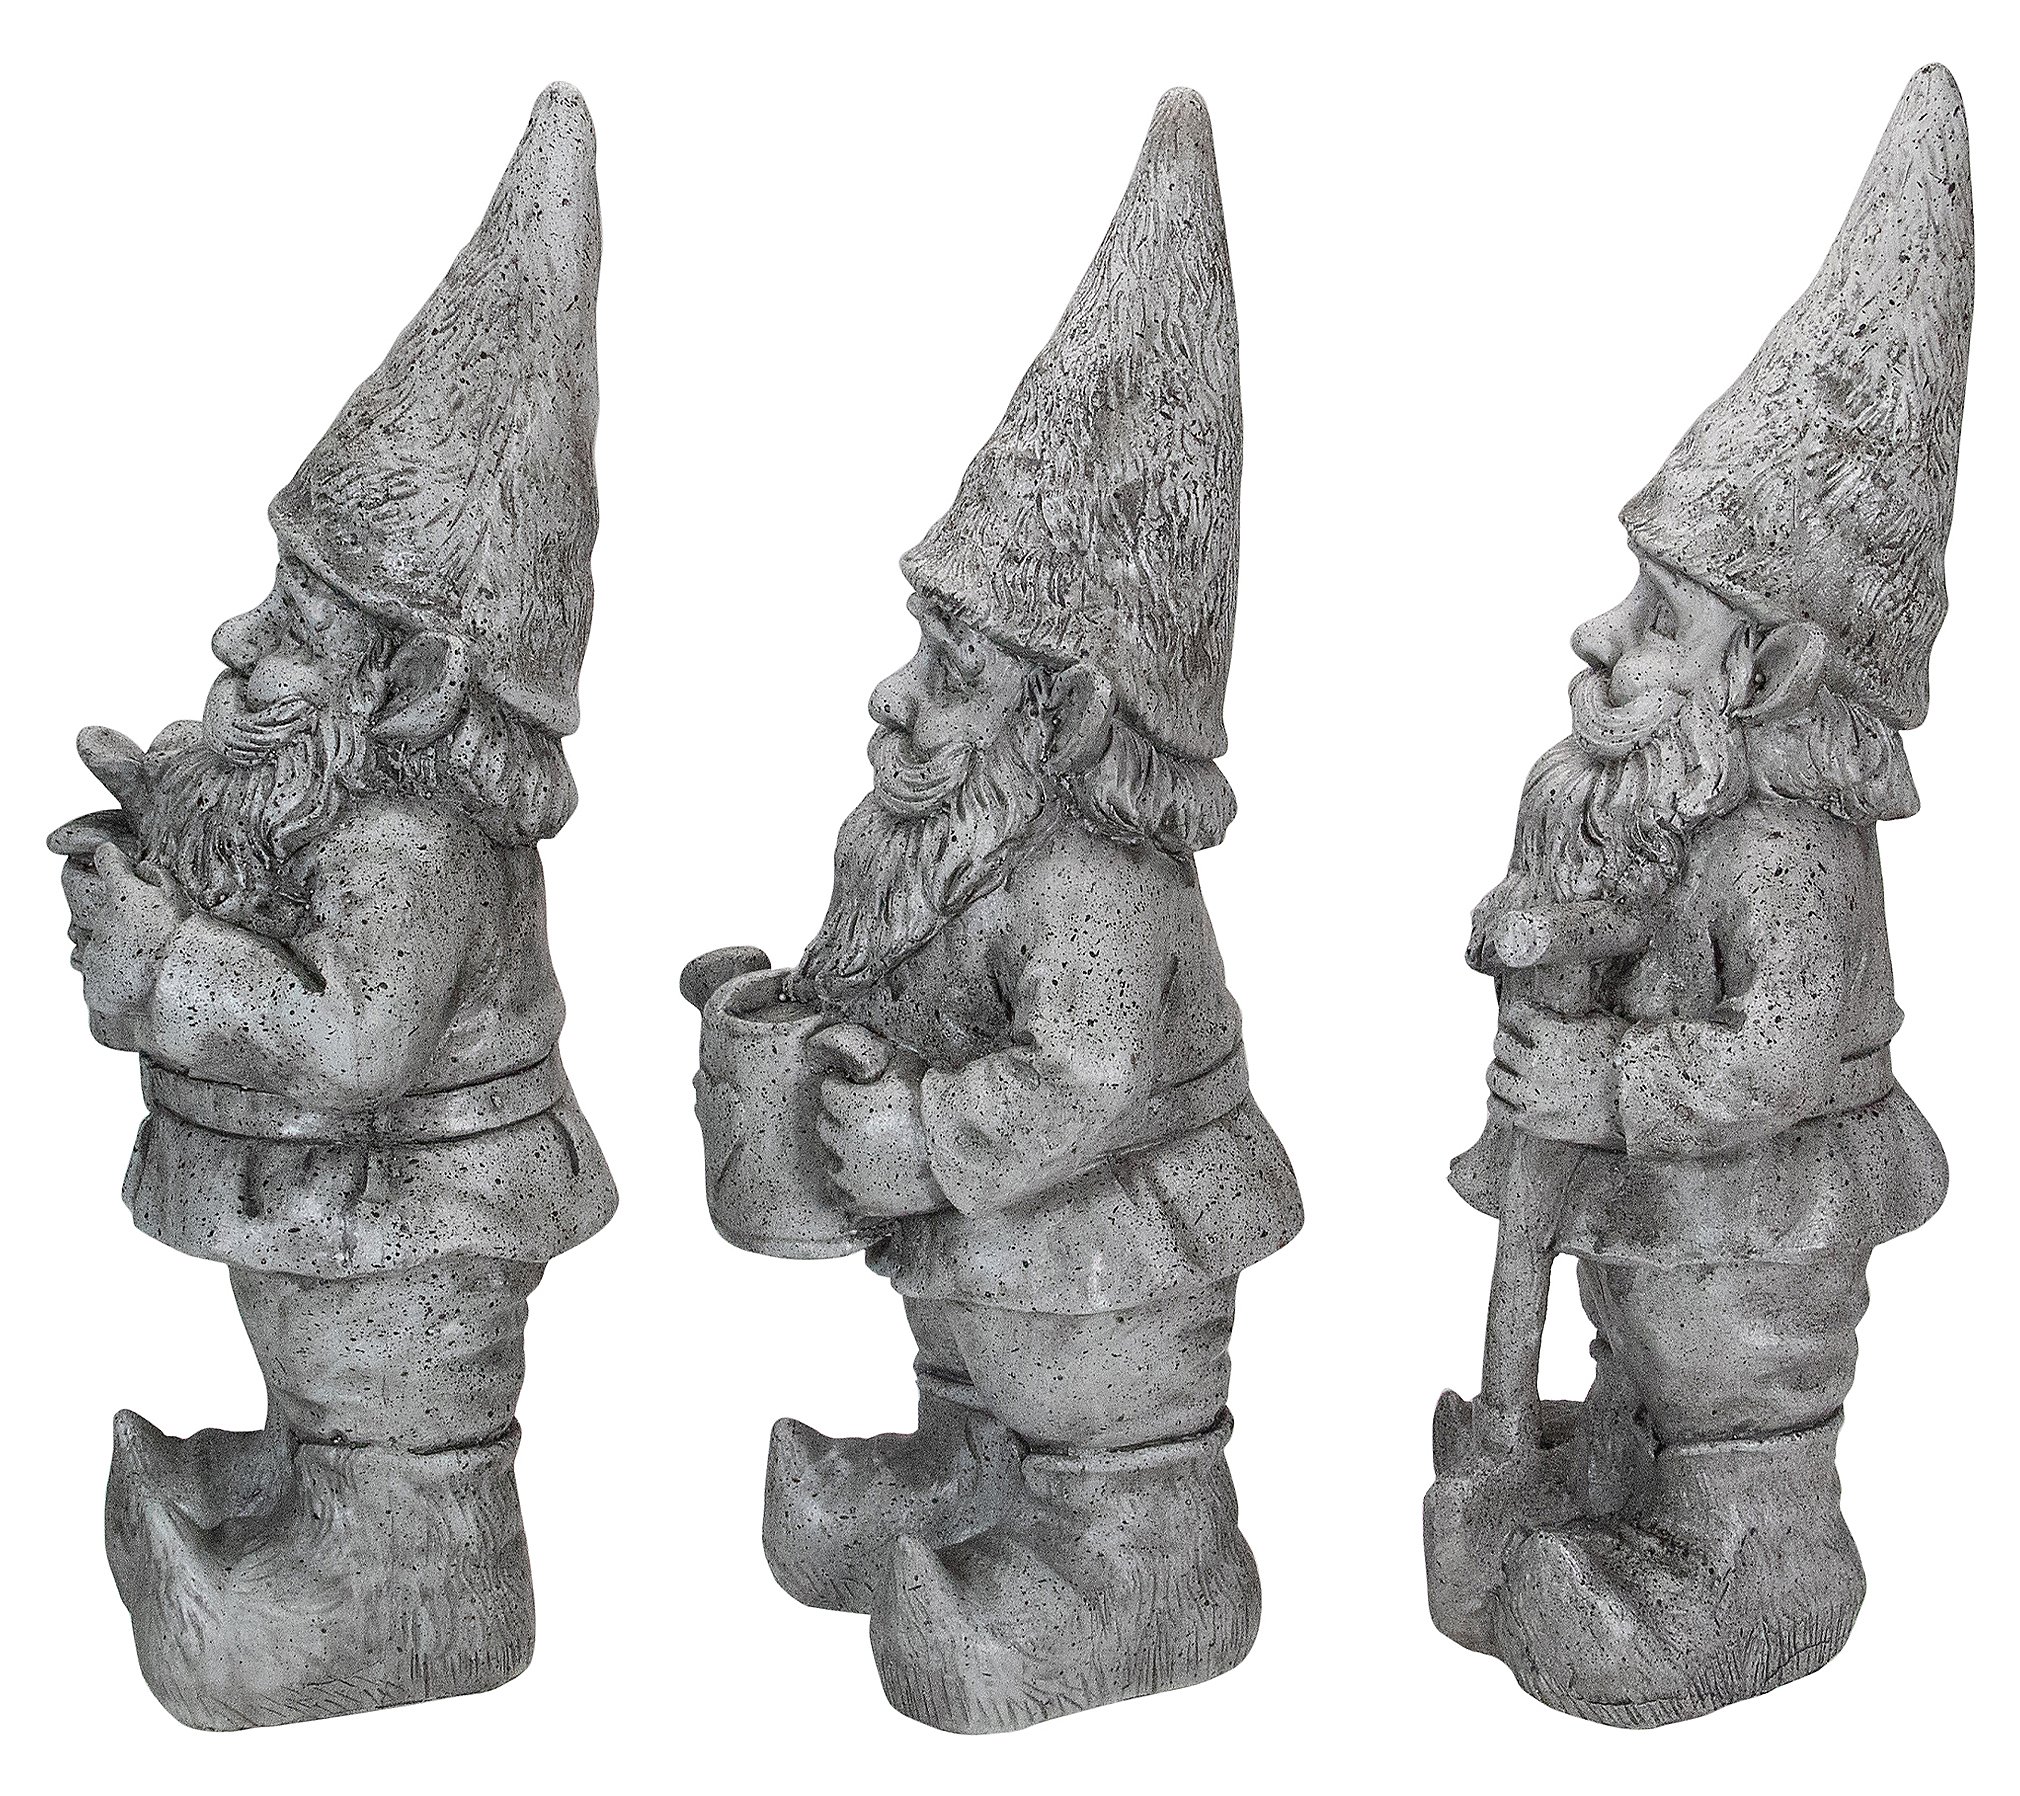 Northlight S 3 Gardening Garden Gnomes Outdoor Statues